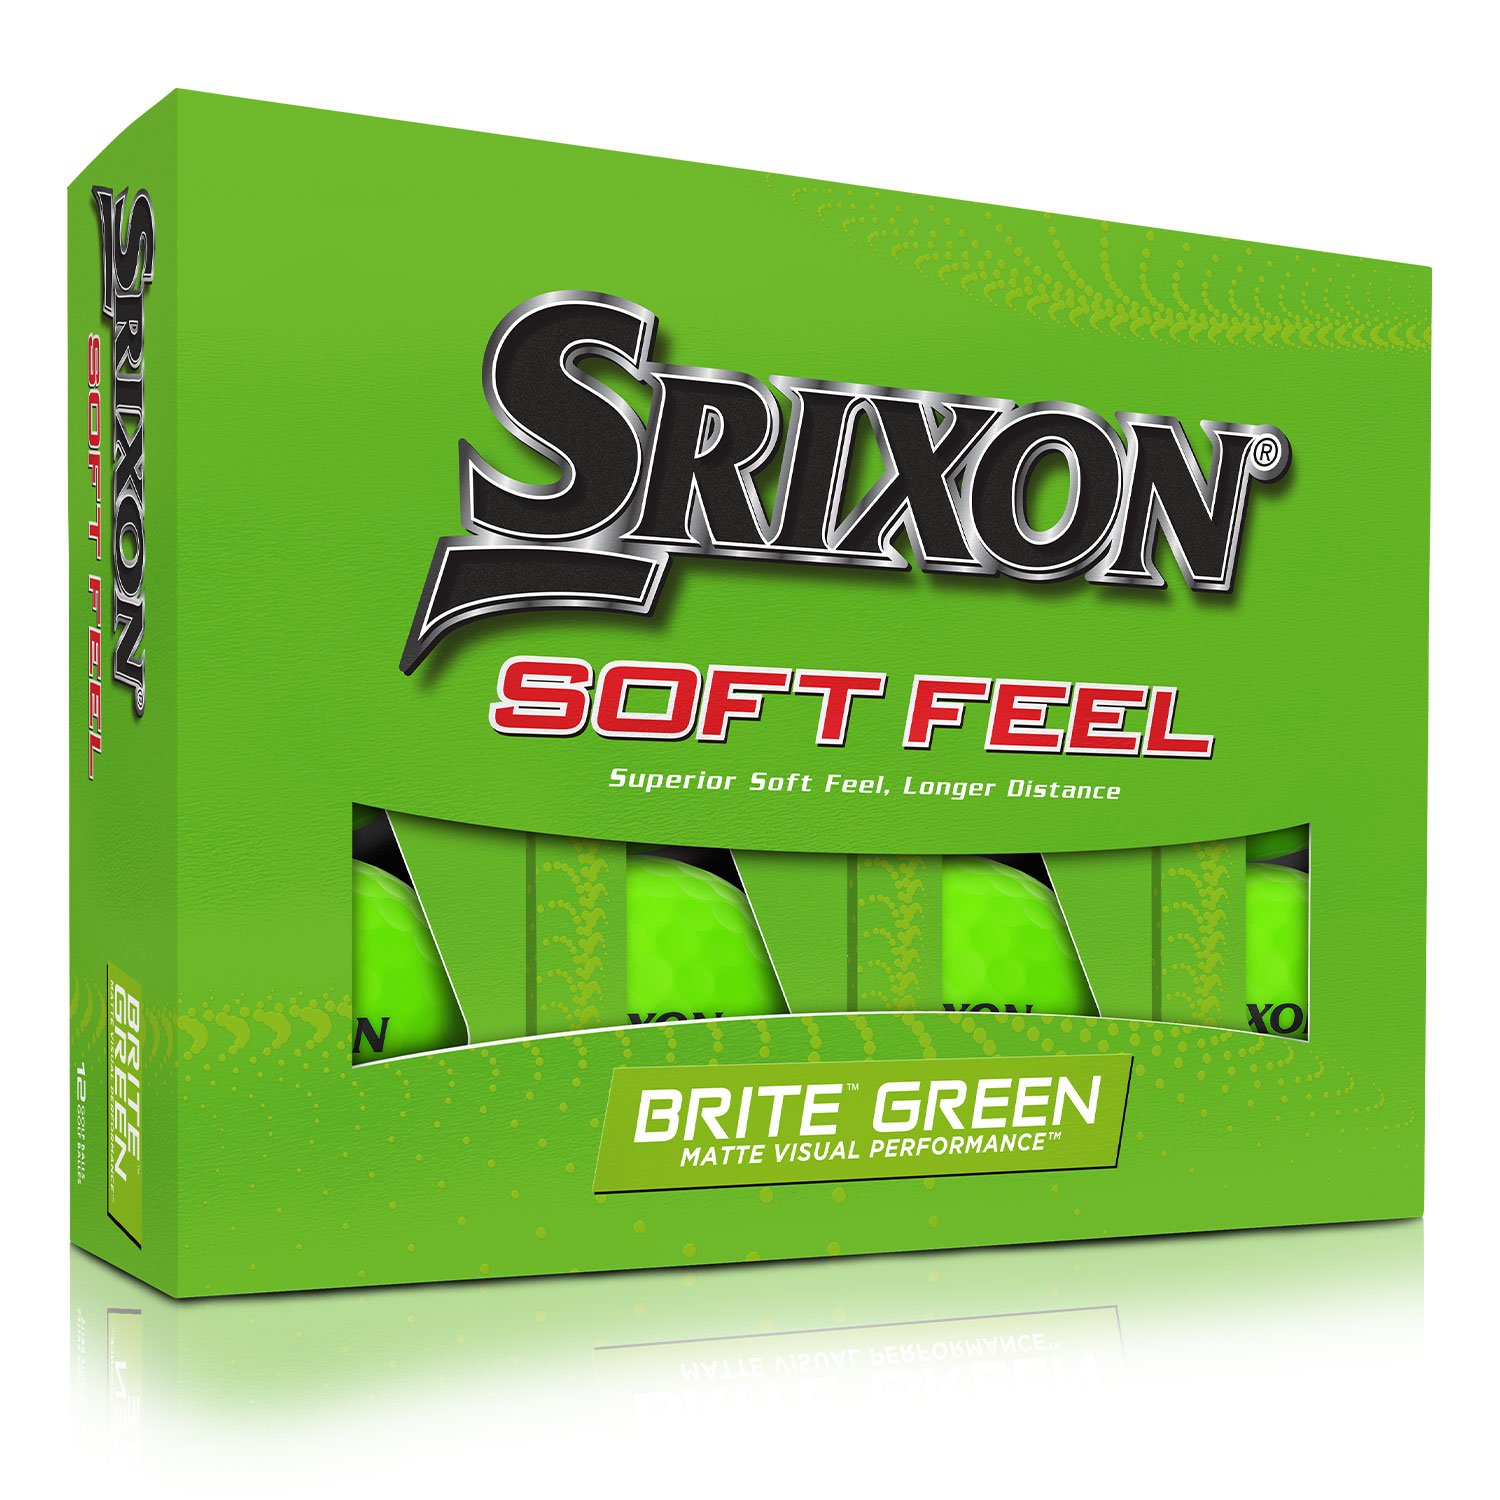 Soft Feel Grøn